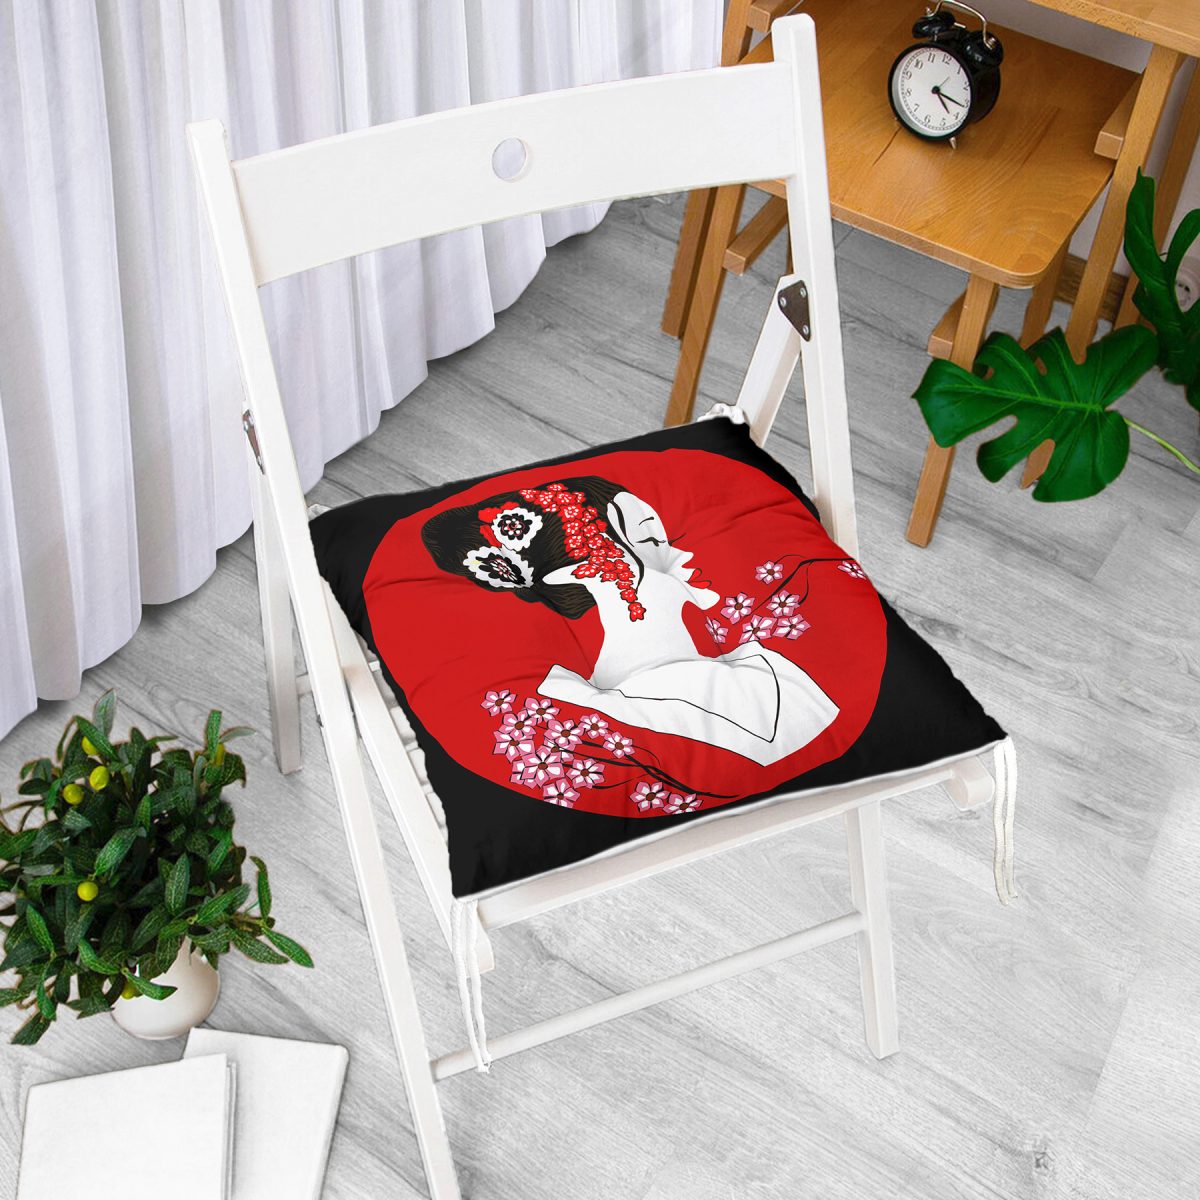 Siyah ve Kırmızı Zeminli Japon Kız Modern Pofuduk Sandalye Minderi Realhomes